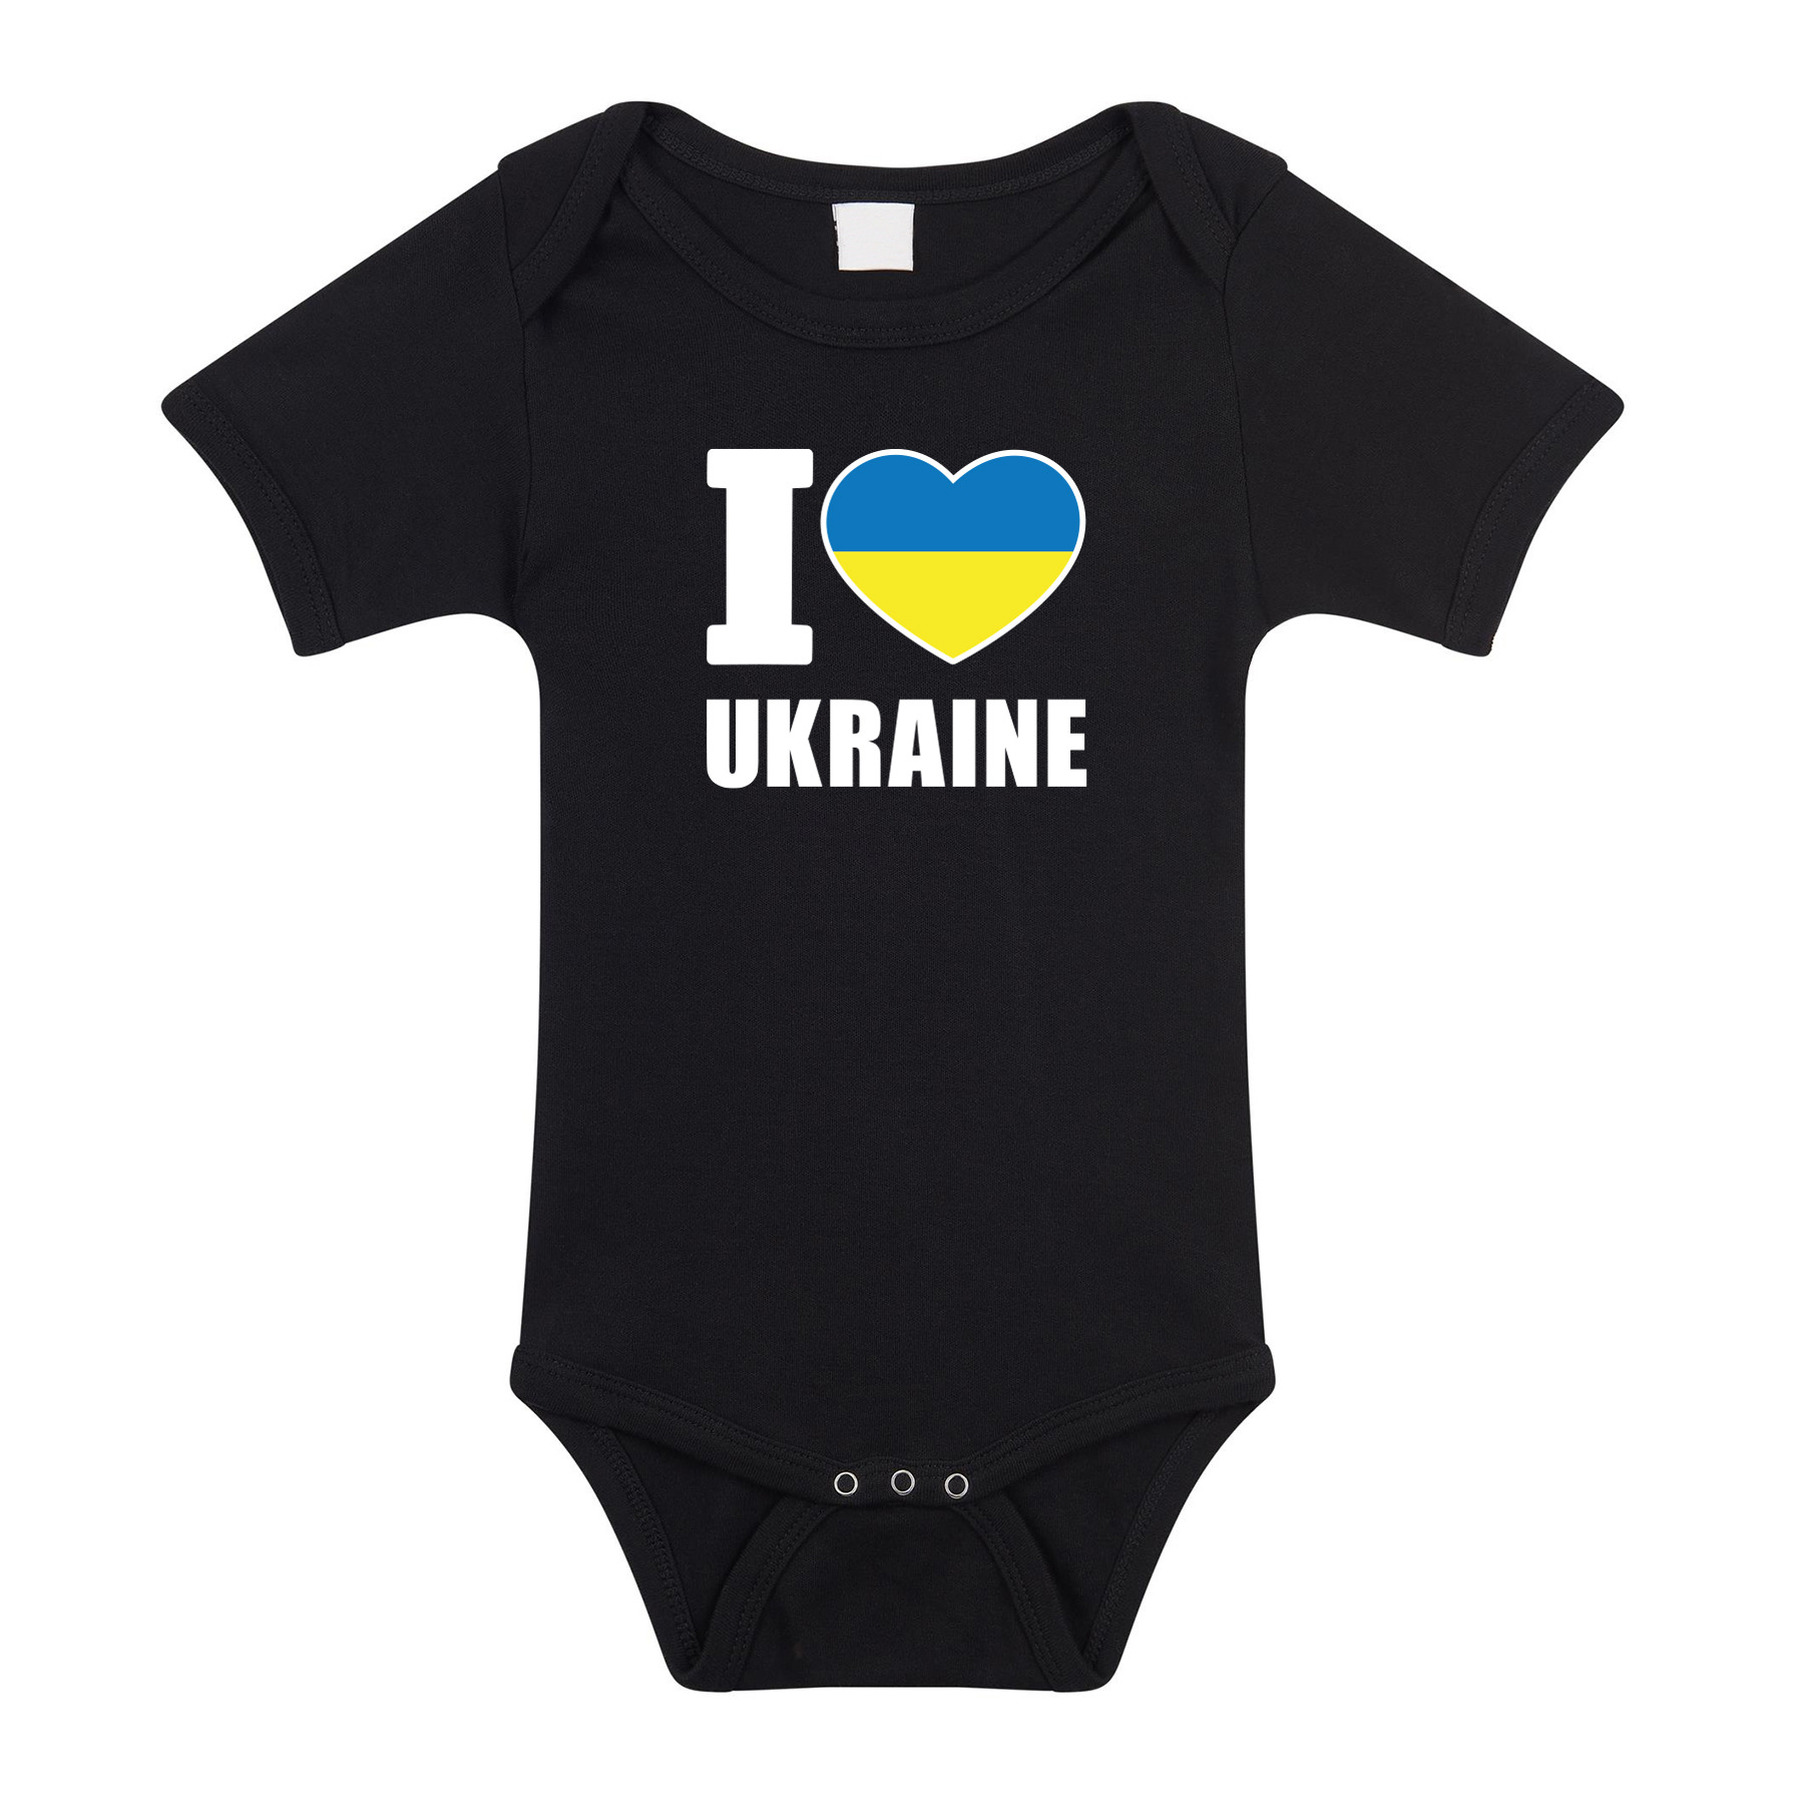 I love Ukraine baby rompertje zwart Oekraine jongen/meisje